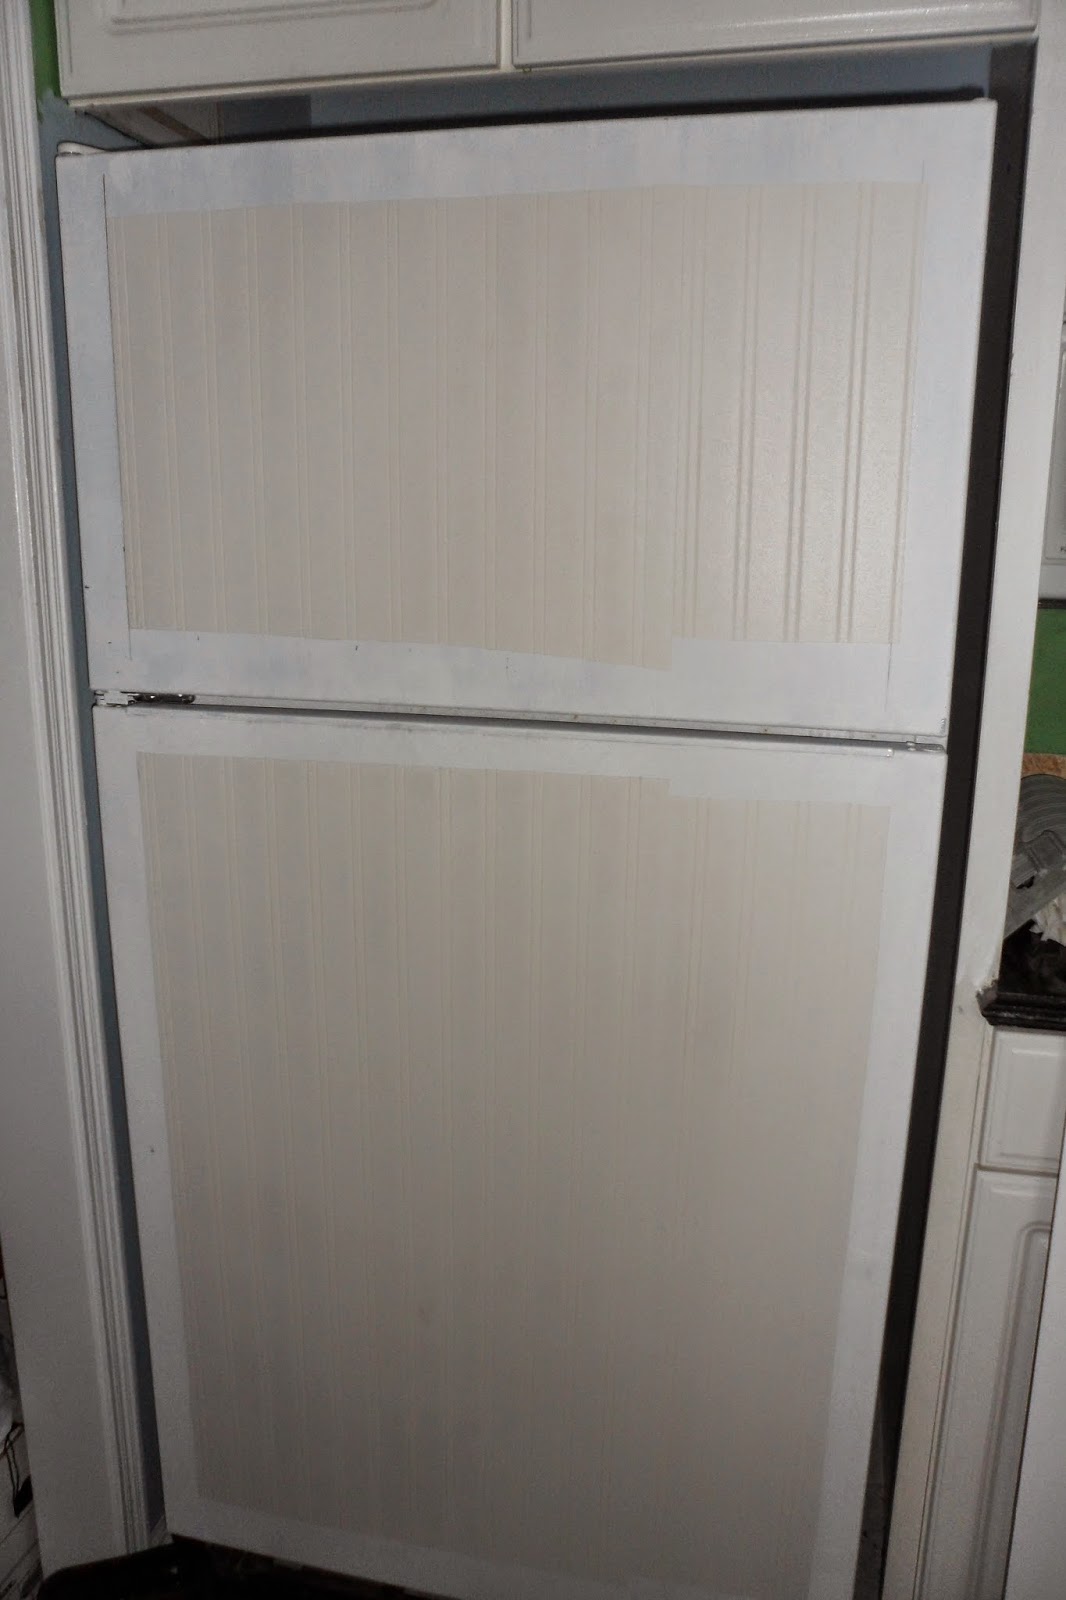 General Splendour Ugly Refrigerator Makeover With Afalchi Free images wallpape [afalchi.blogspot.com]